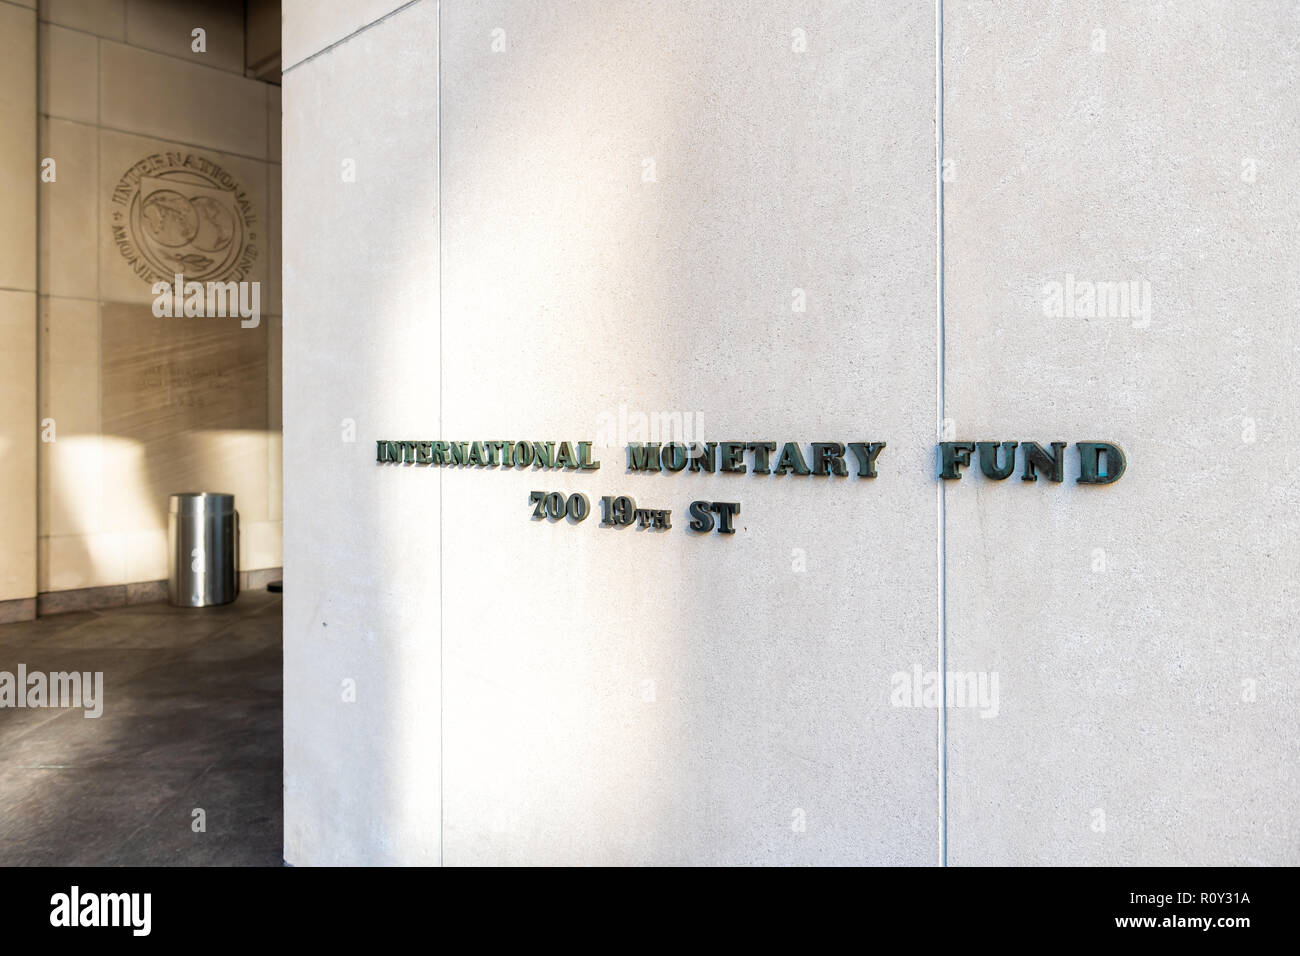 Washington DC, USA - March 9, 2018: IMF entrance with sign of International Monetary Fund, logo with nobody, no people Stock Photo